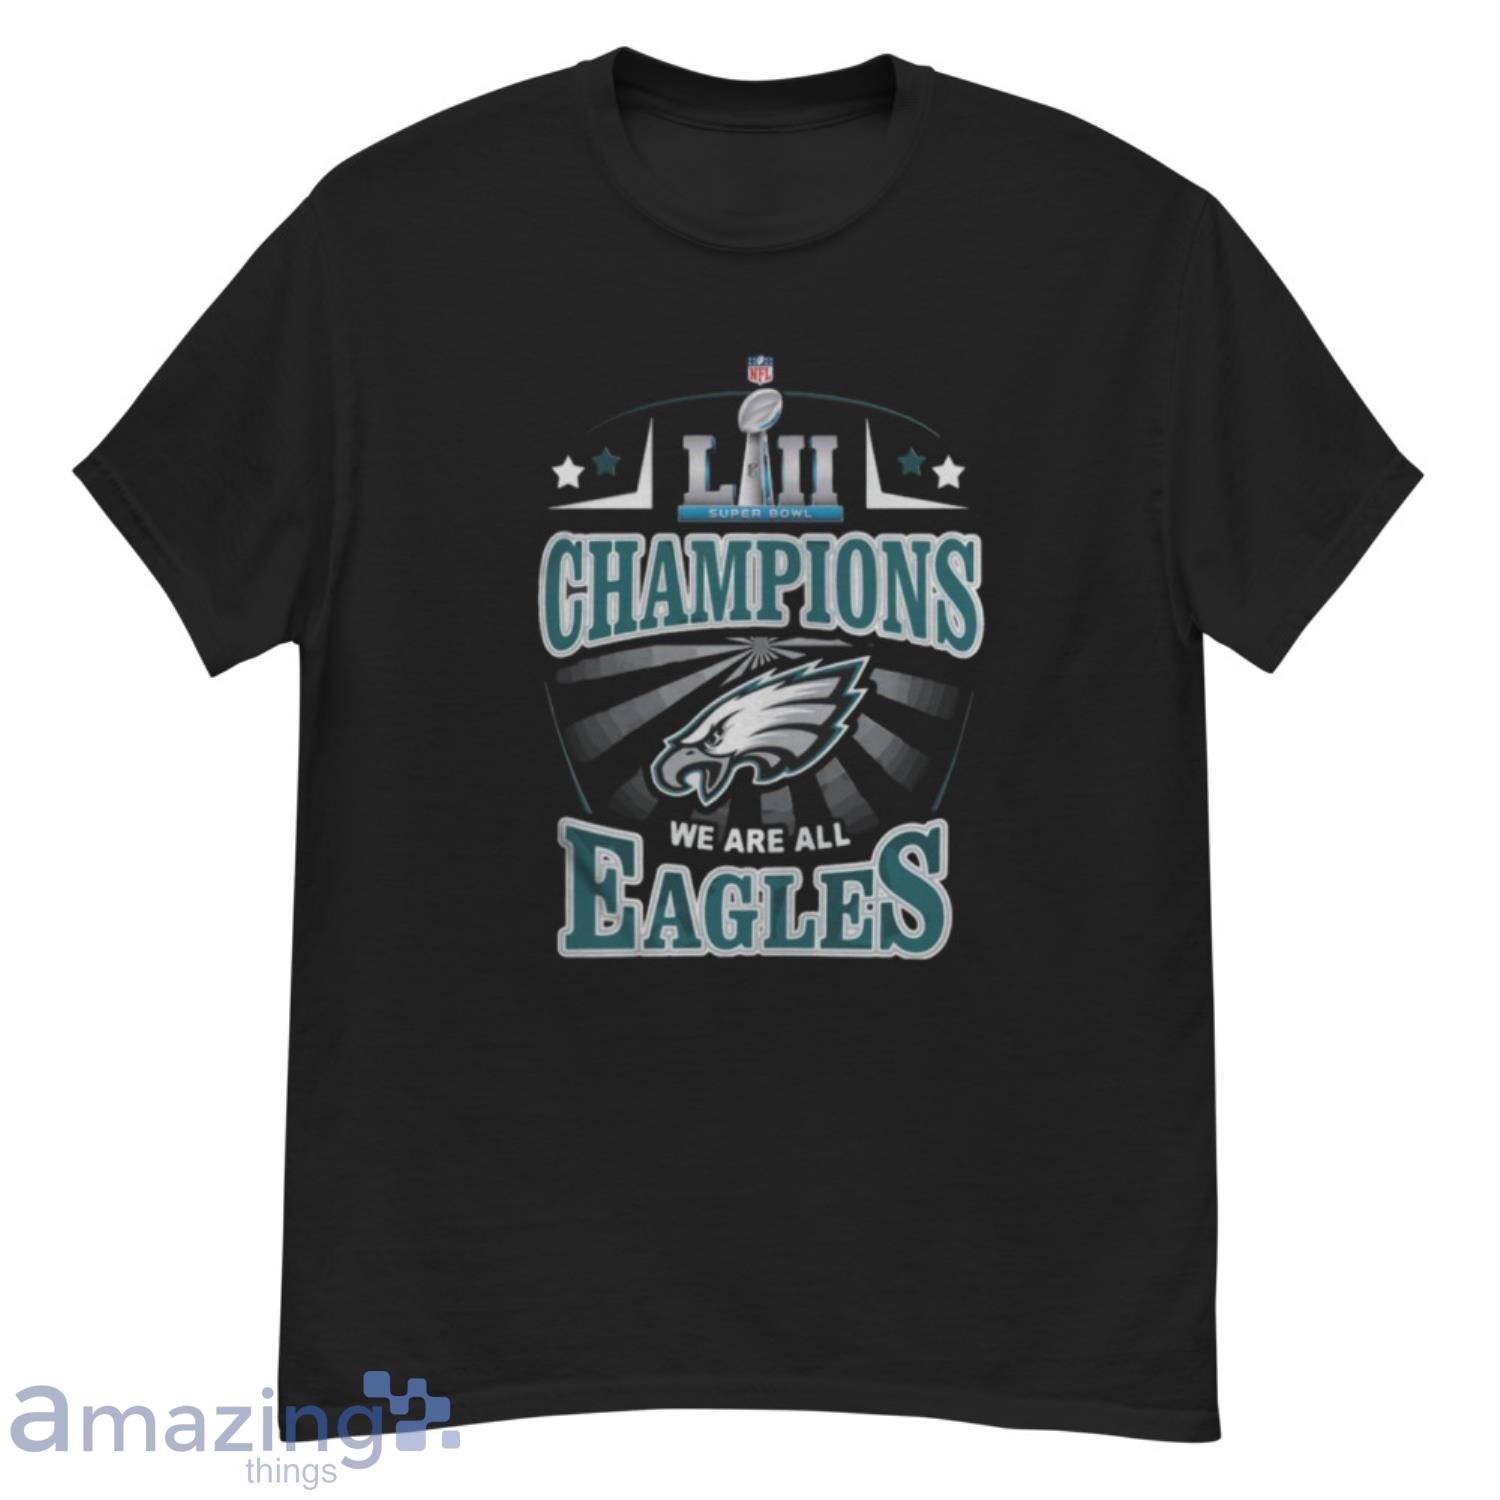 philadelphia eagles super bowl shirt